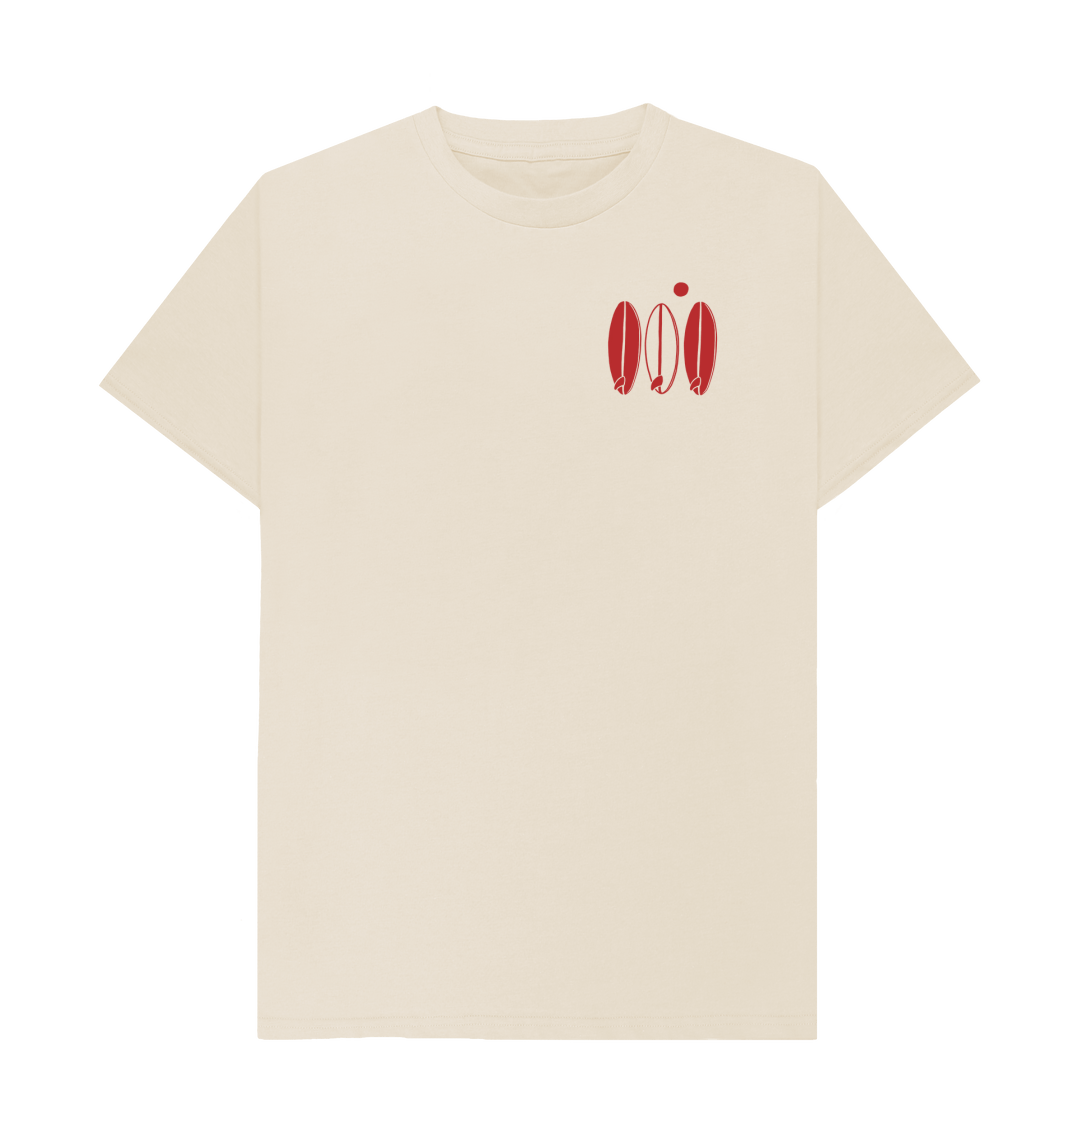 Surf T - shirt - Printed T - shirt